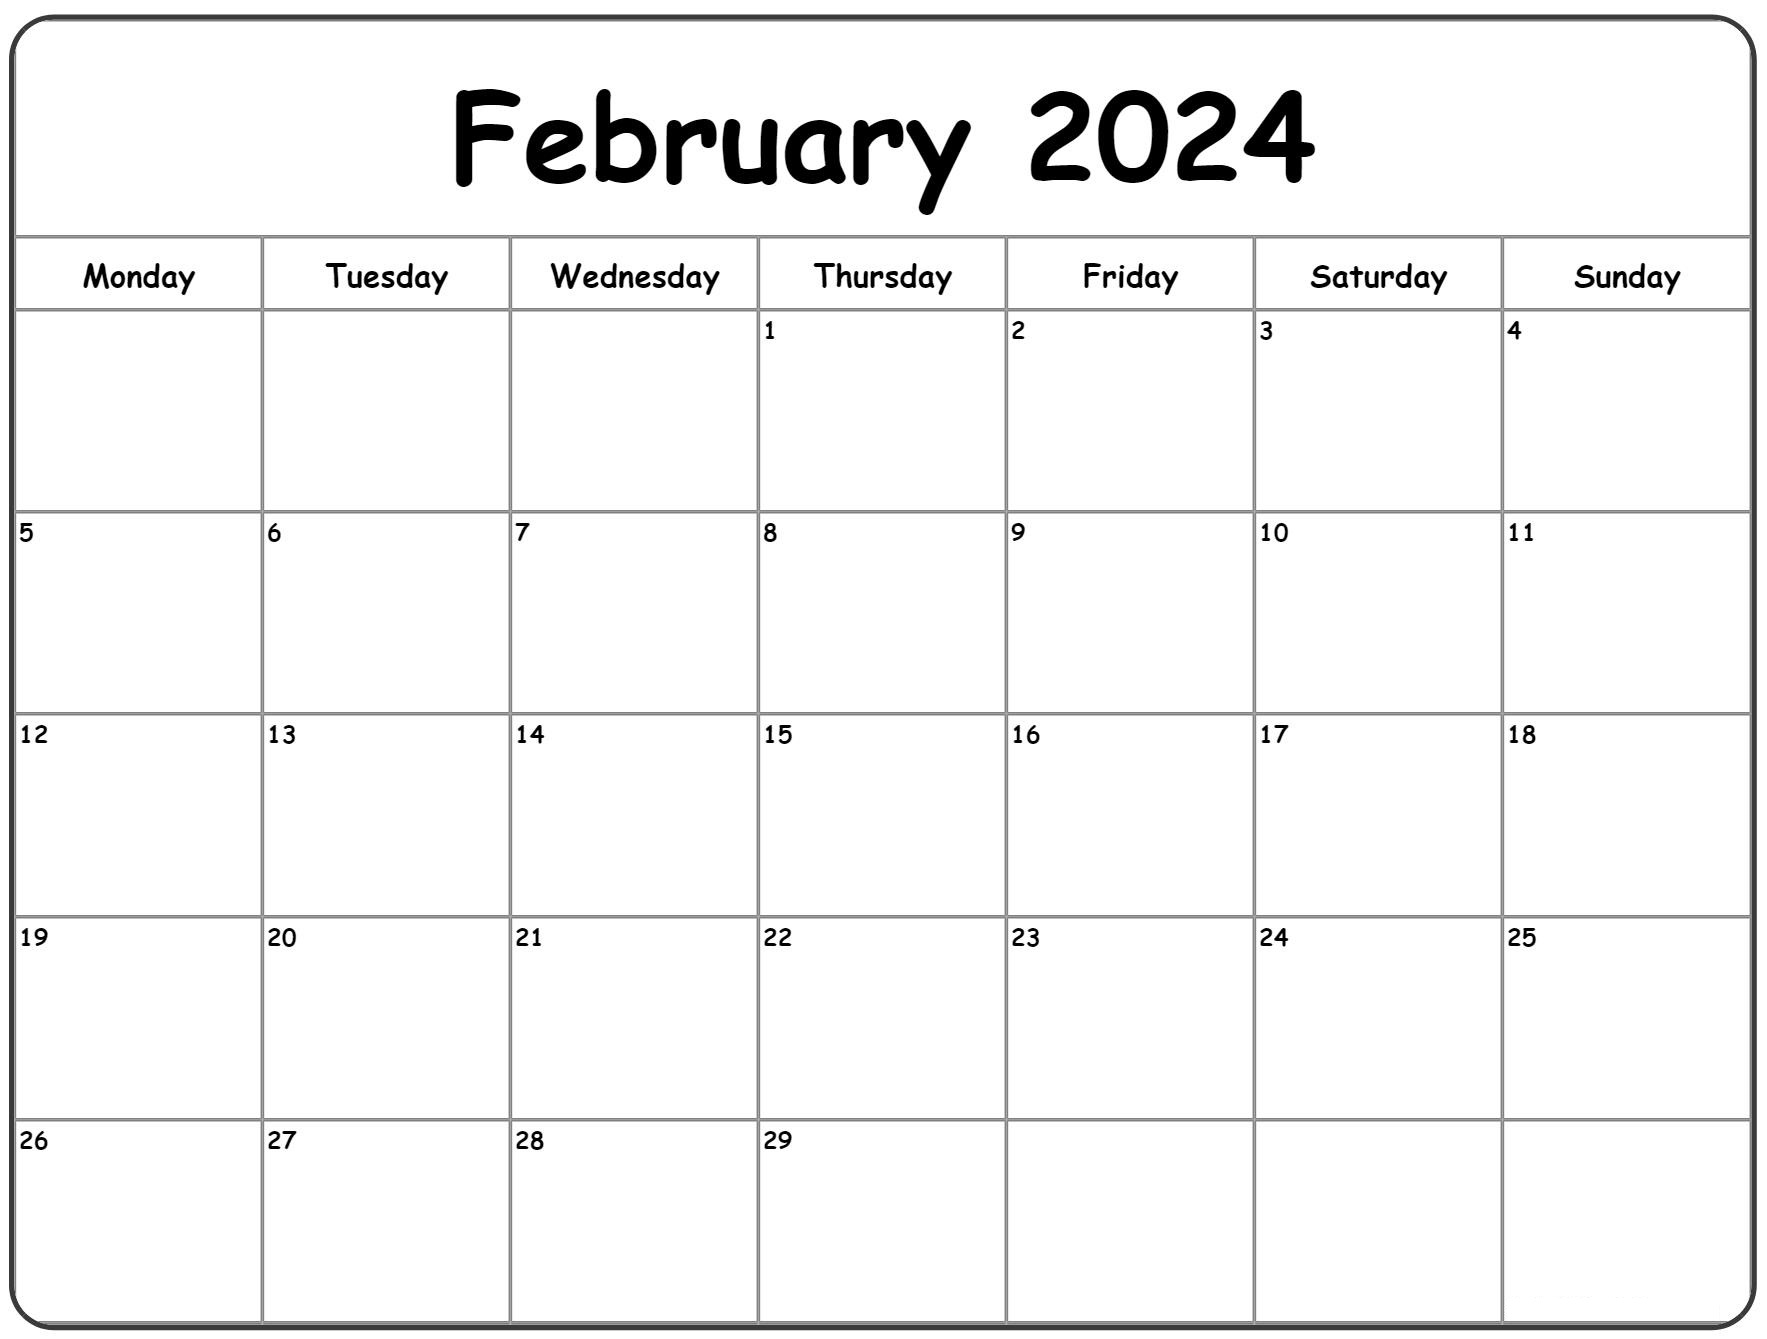 Blank February 2024 calendar for printing